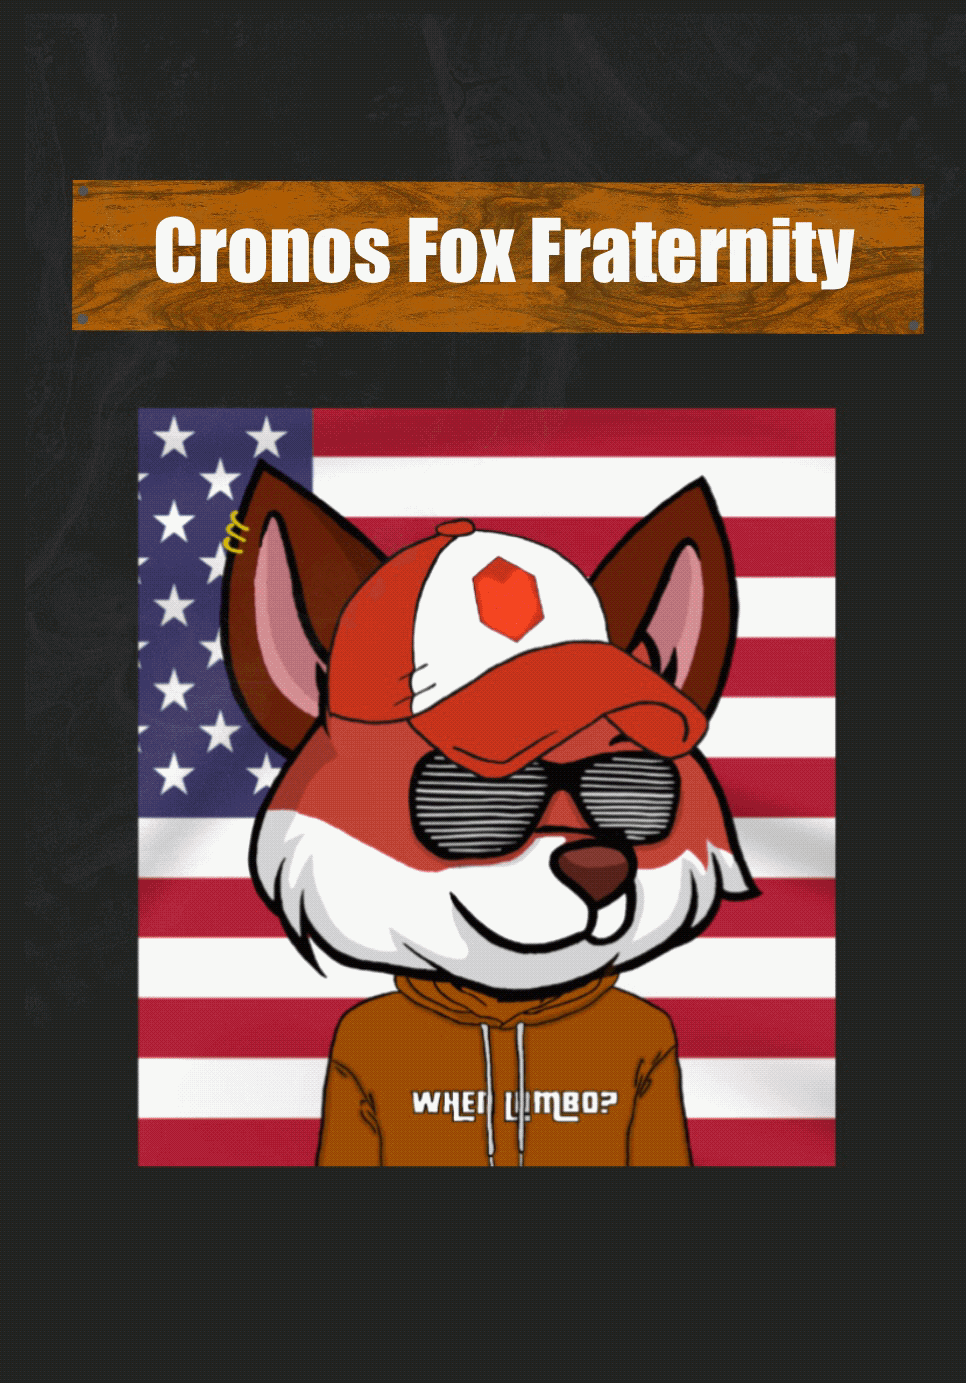 Cronos Fox Fraternity